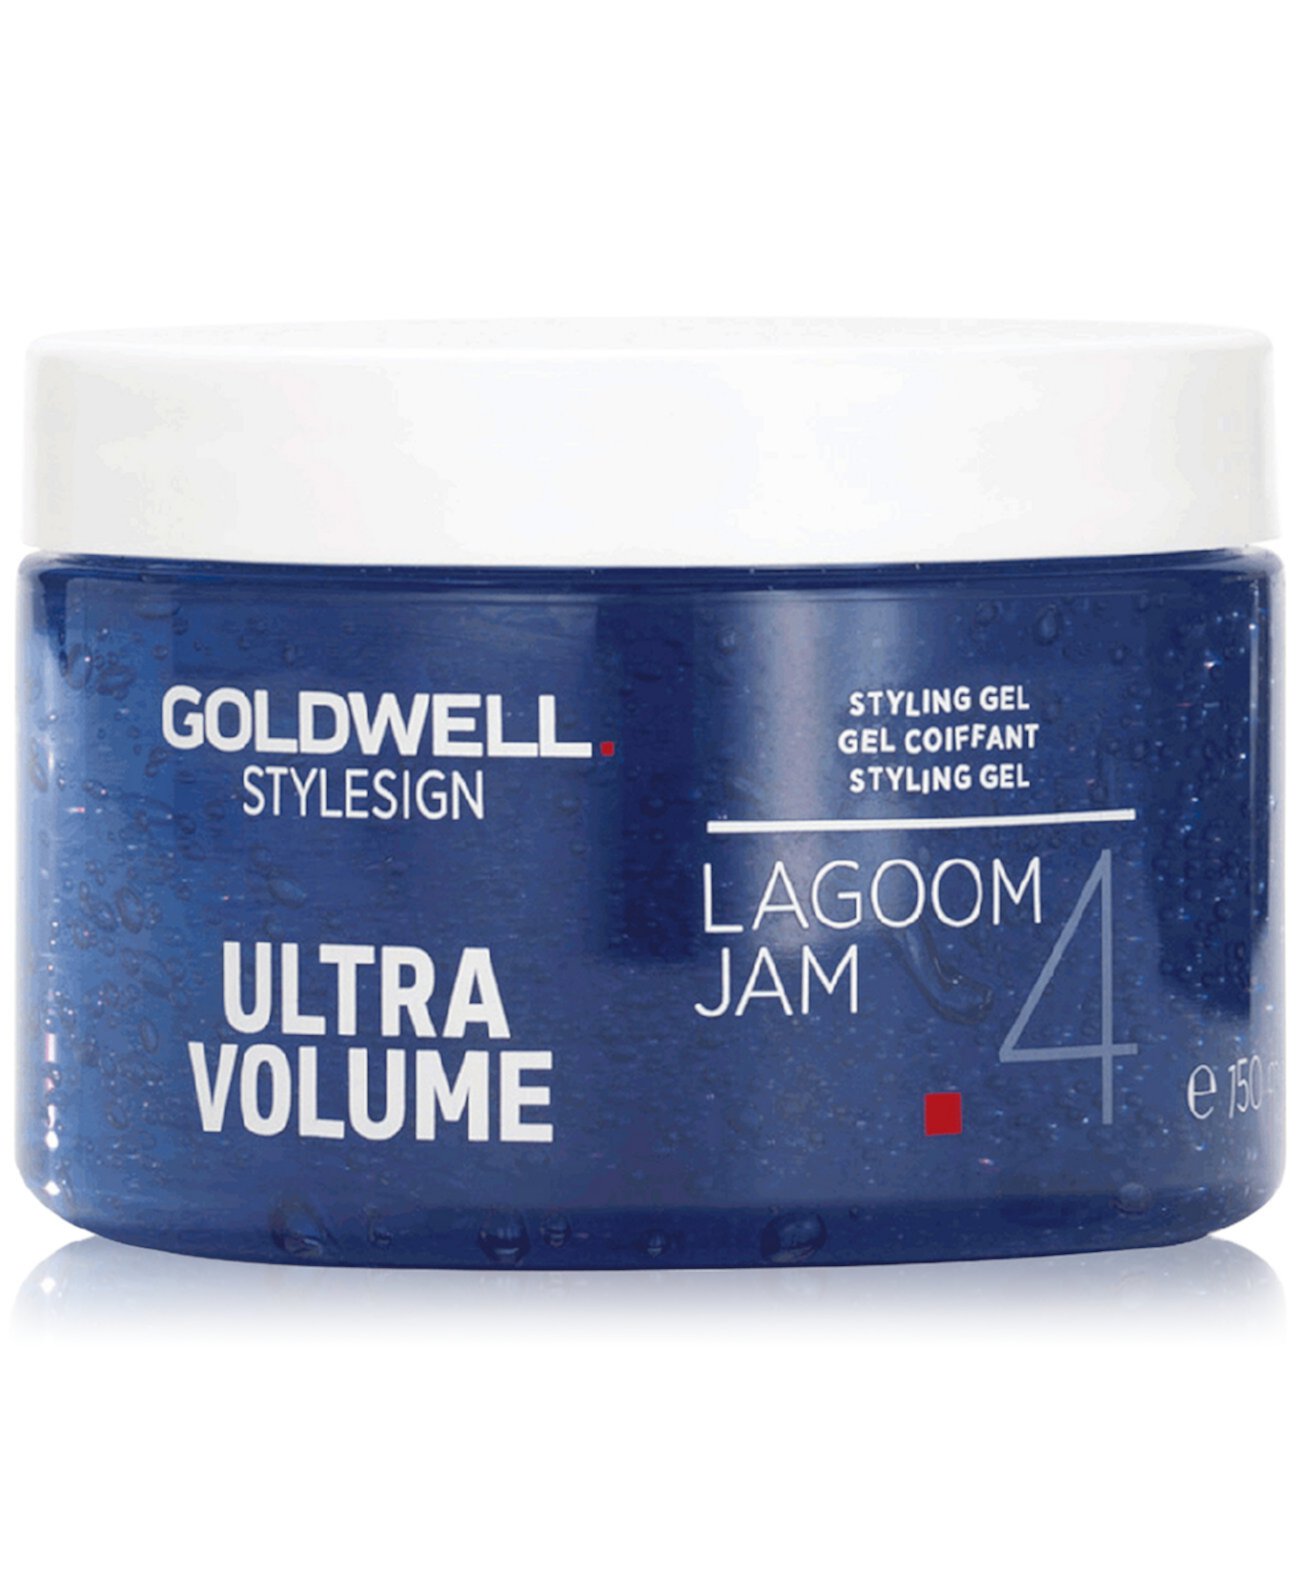 Гель для укладки StyleSign Ultra Volume Lagoom Jam, 5 унций, от PUREBEAUTY Salon & Spa Goldwell